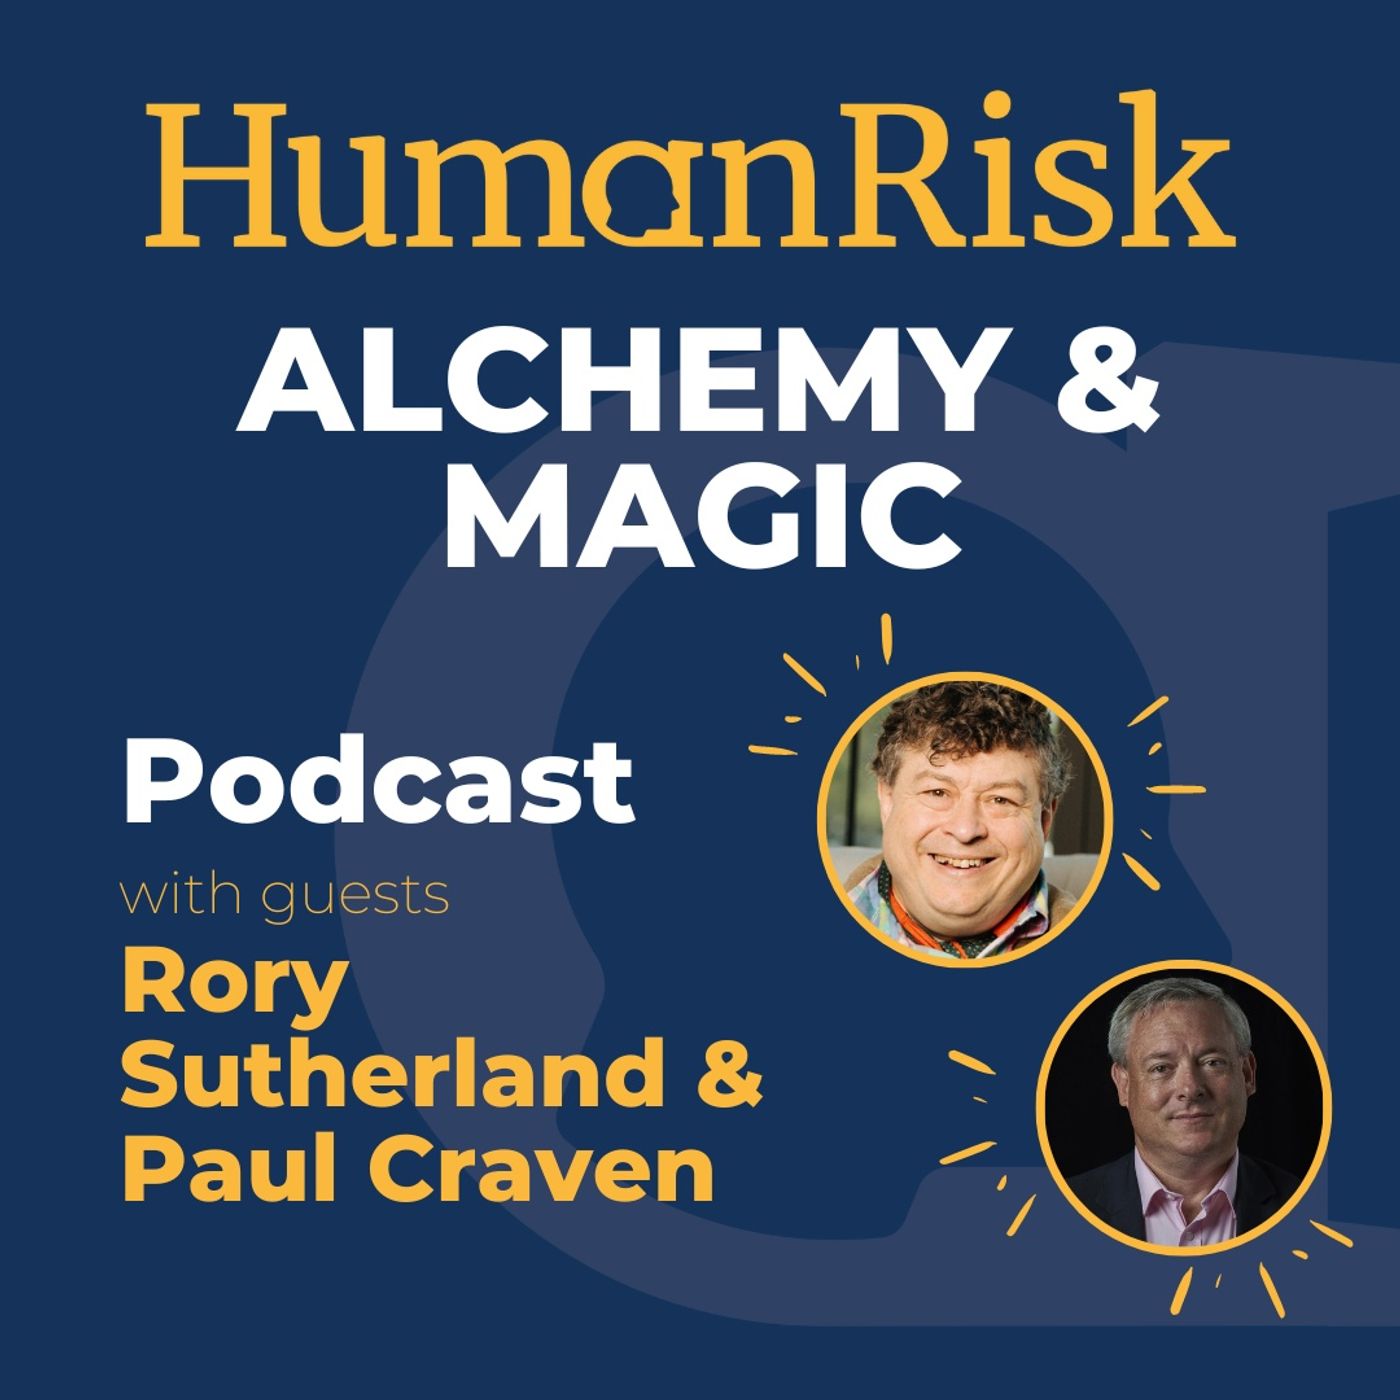 Rory Sutherland & Paul Craven on Alchemy & Magic Image